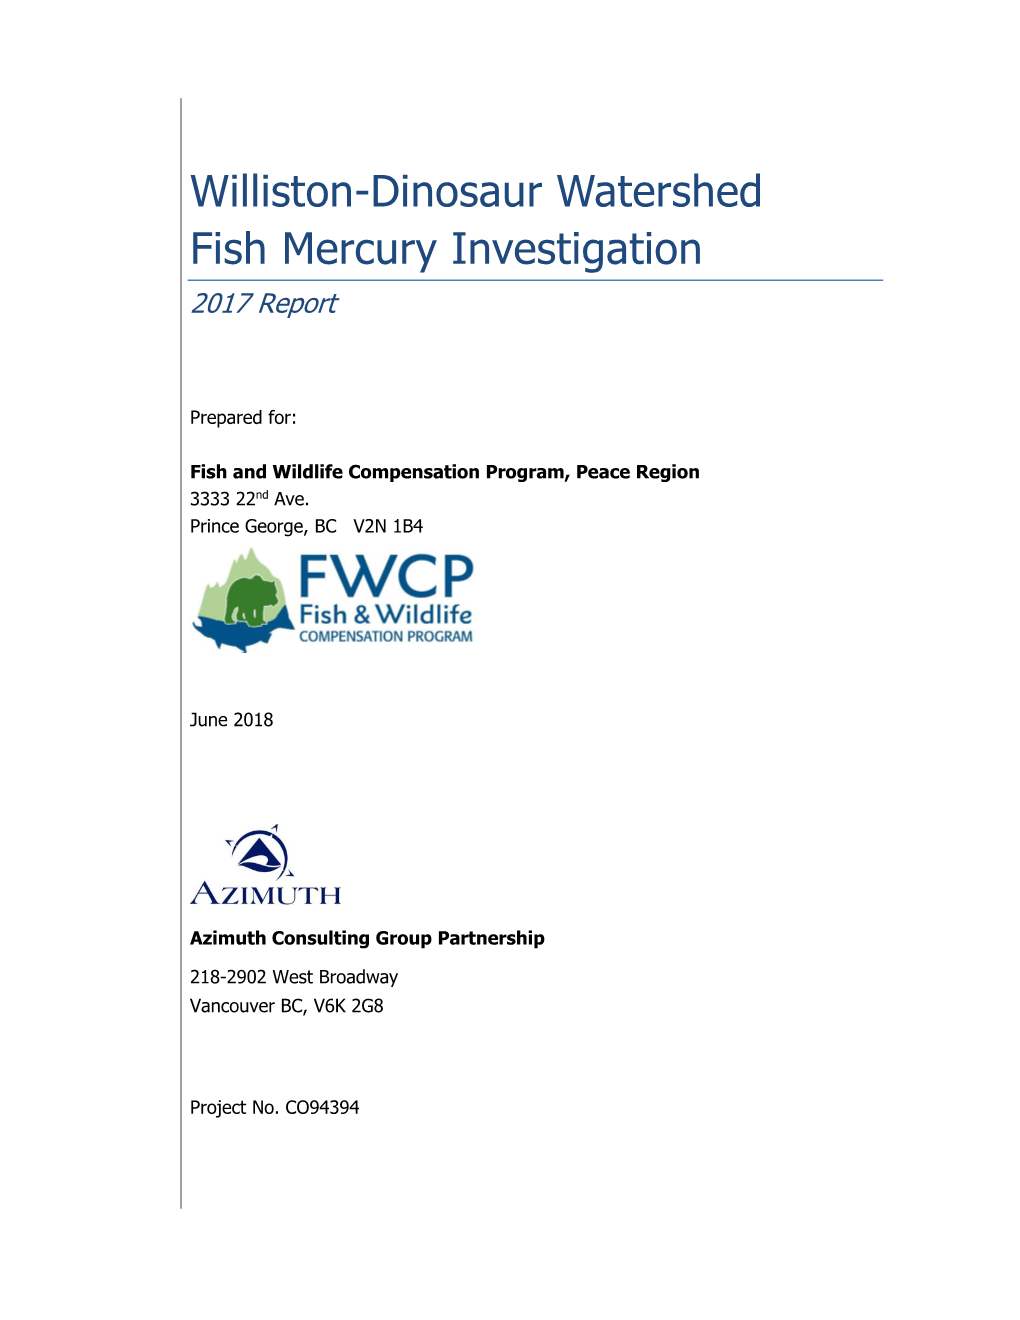 Williston-Dinosaur Watershed Fish Mercury Investigation 2017 Report